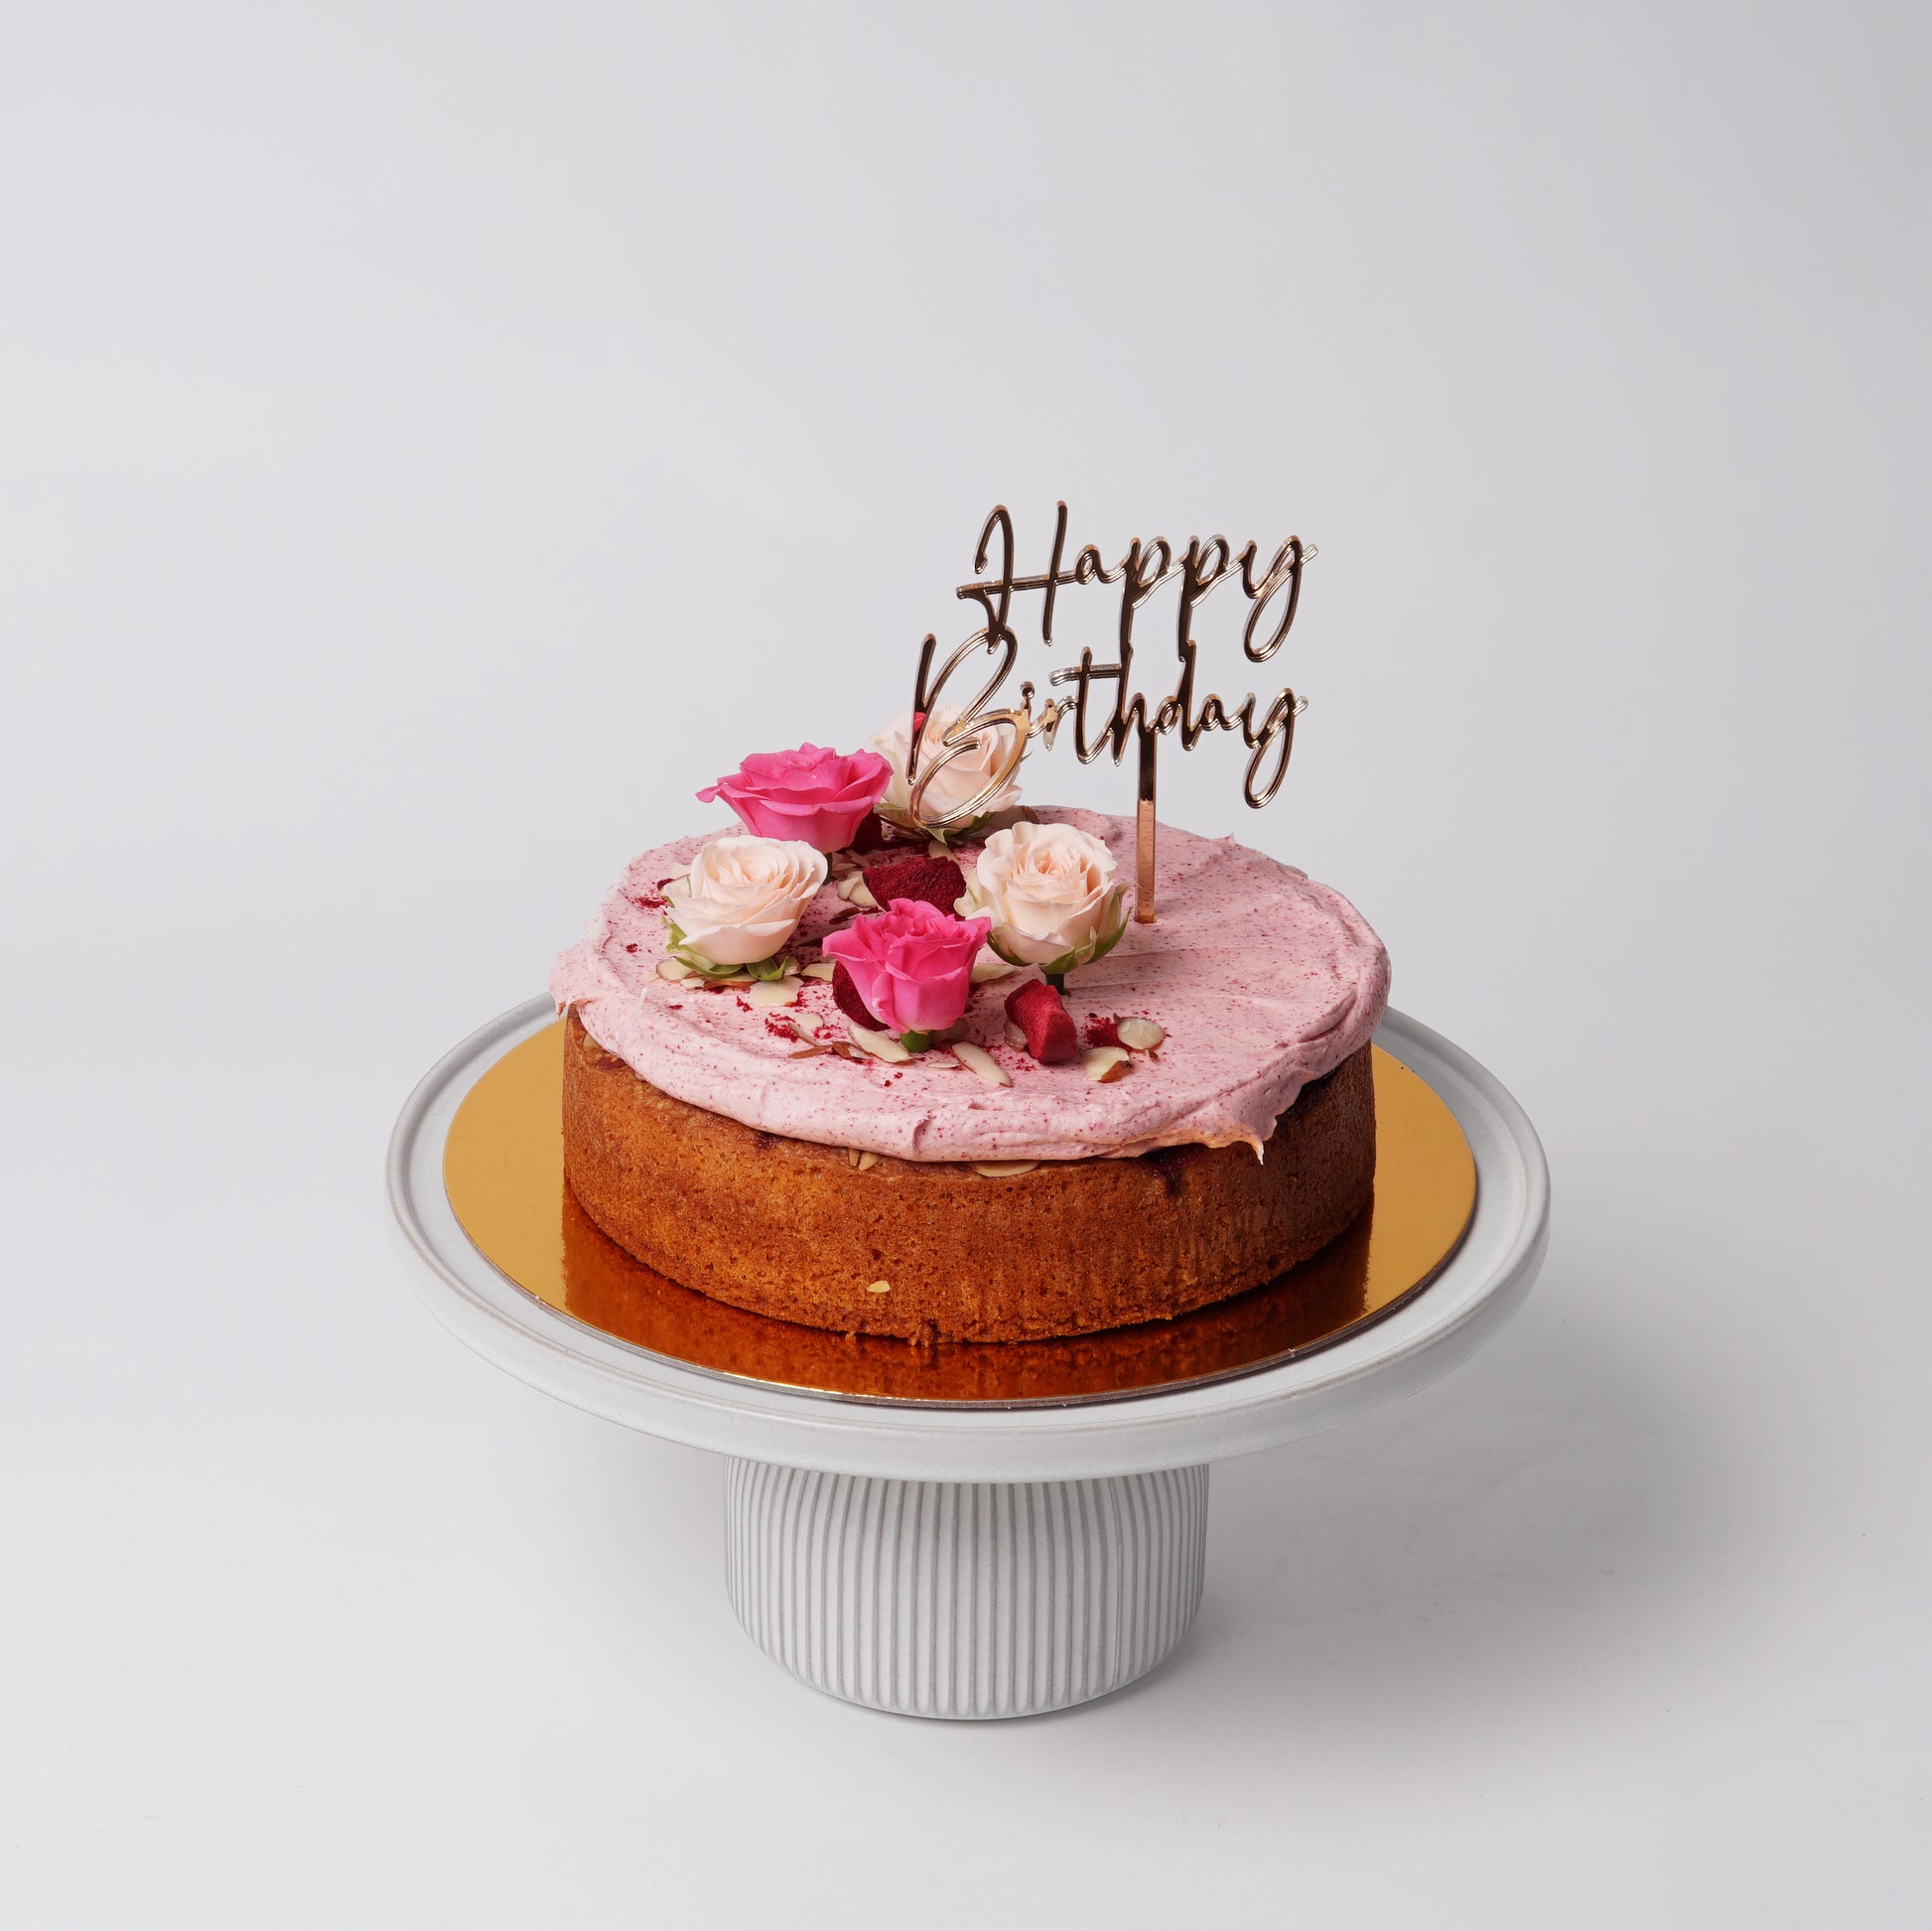 PLUM & ALMOND (GF) CAKE WITH HAPPY BIRTHDAY GOLD MIRROR CAKE TOPPER